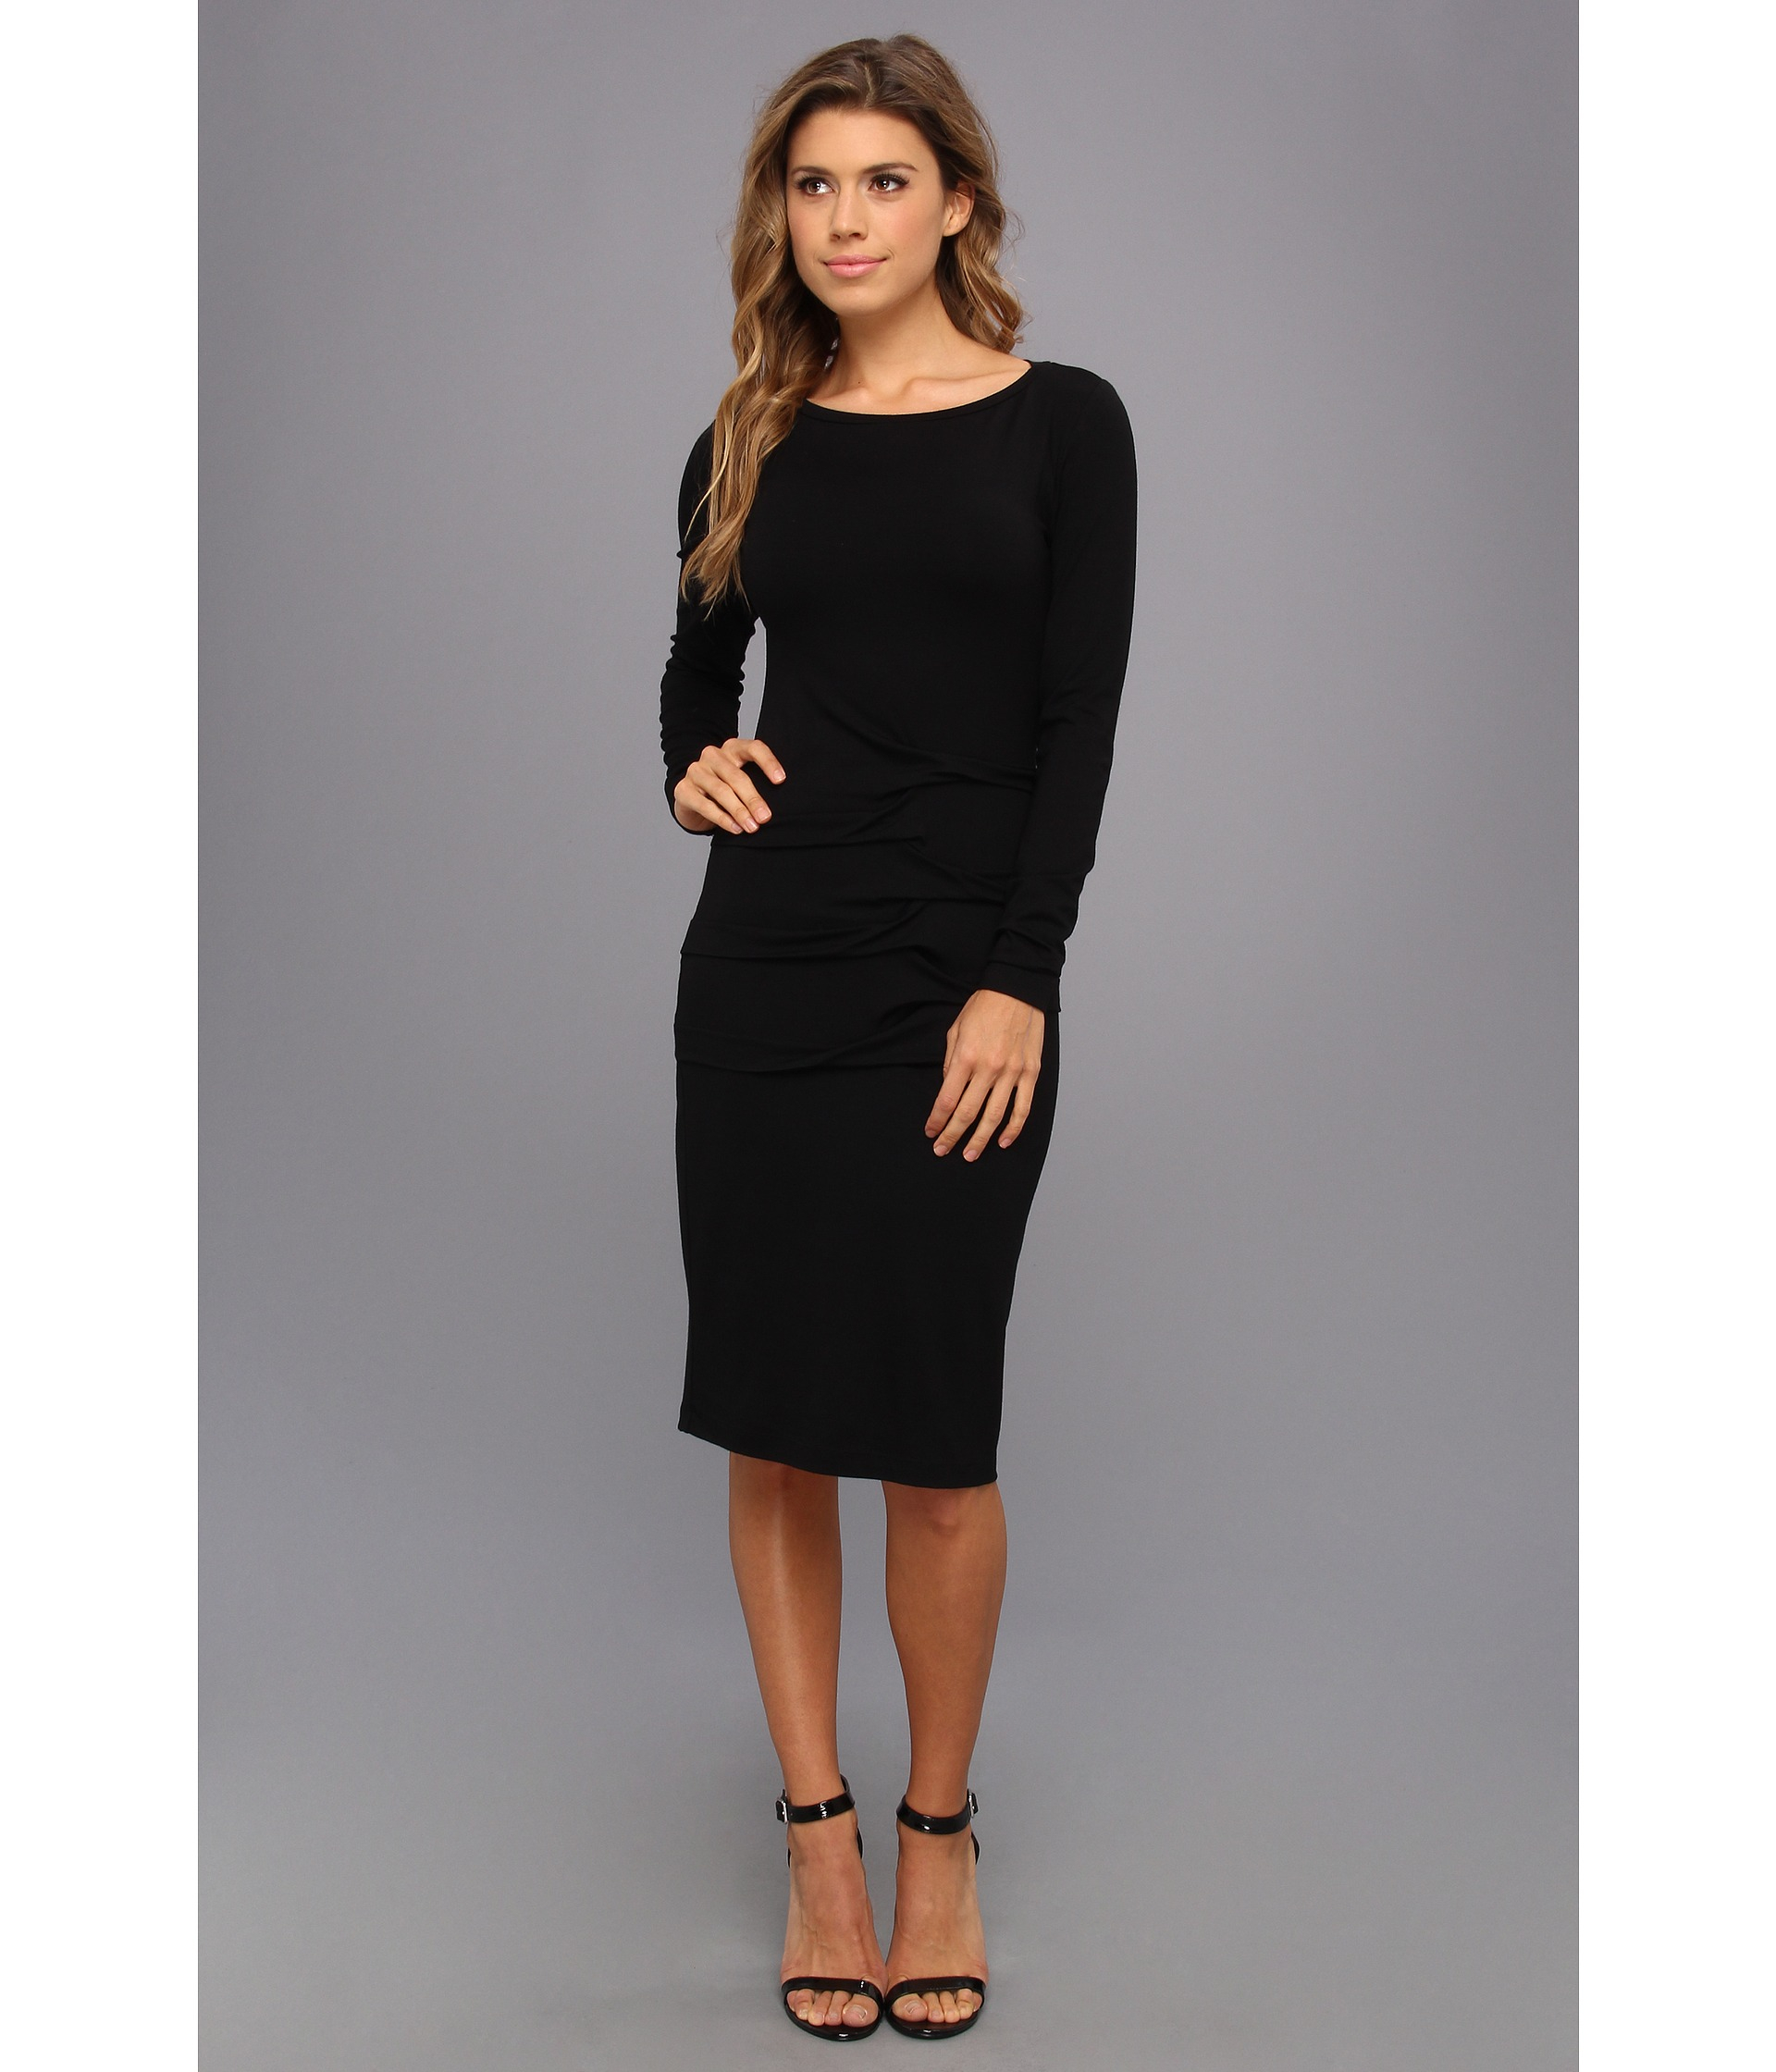 Nicole Miller Leslie Long Sleeve Jersey Dress in Black | Lyst